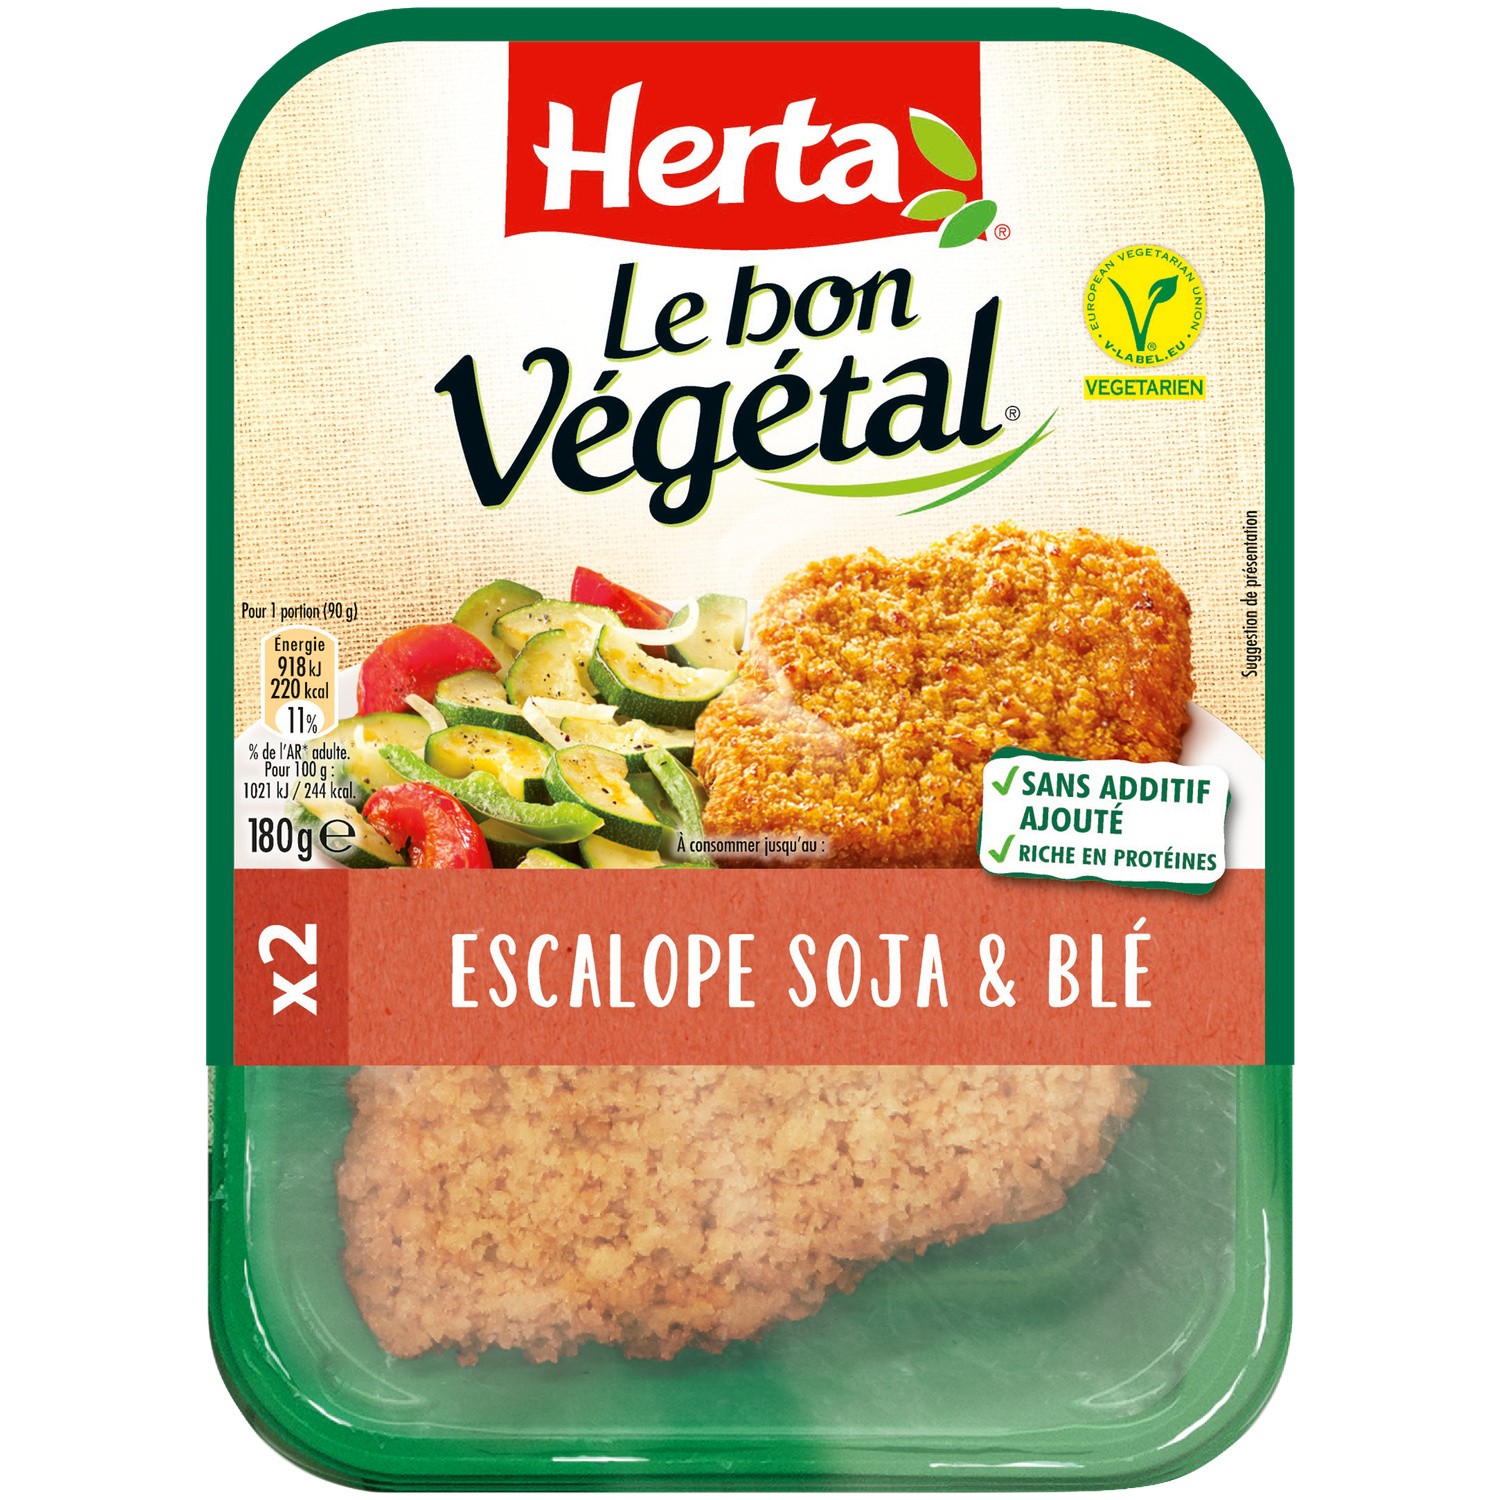 2 Escalopes Soja & Blé "Le bon Végétal"